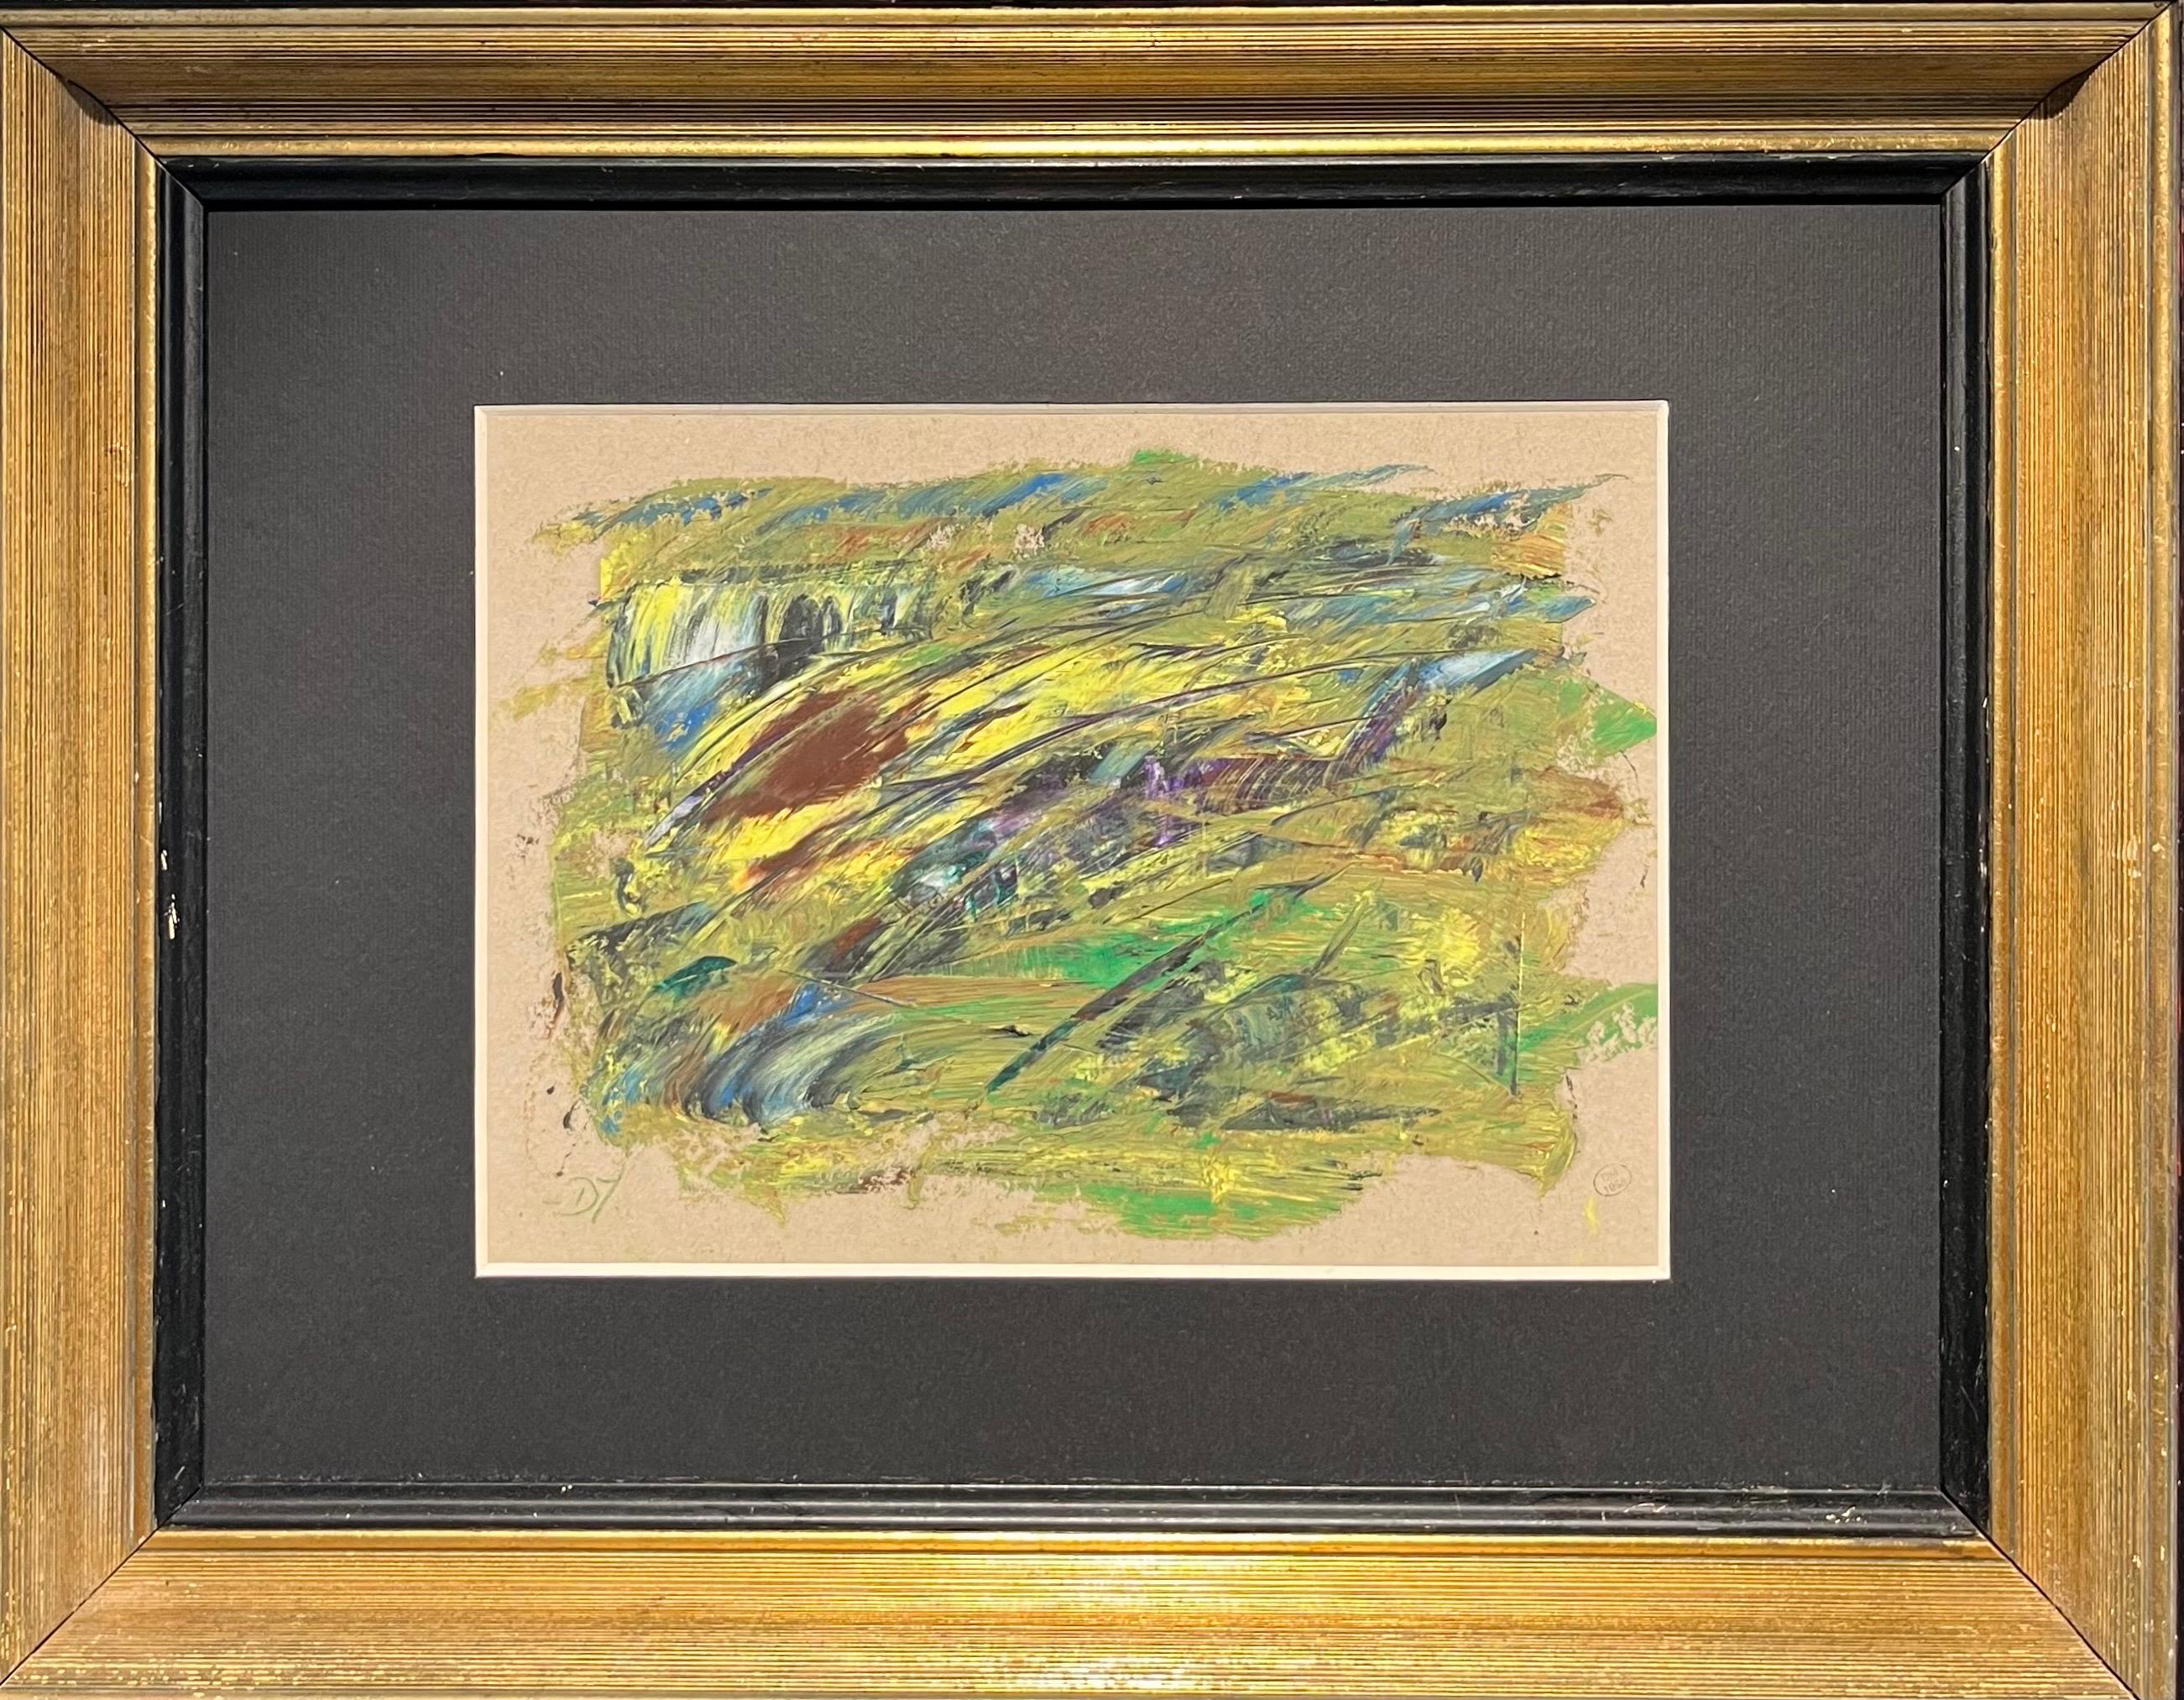 Abstract Painting Dora Maar - "Composition abstraite verte Huile cm. 27 x 26 1950 ca Vert , Jaune